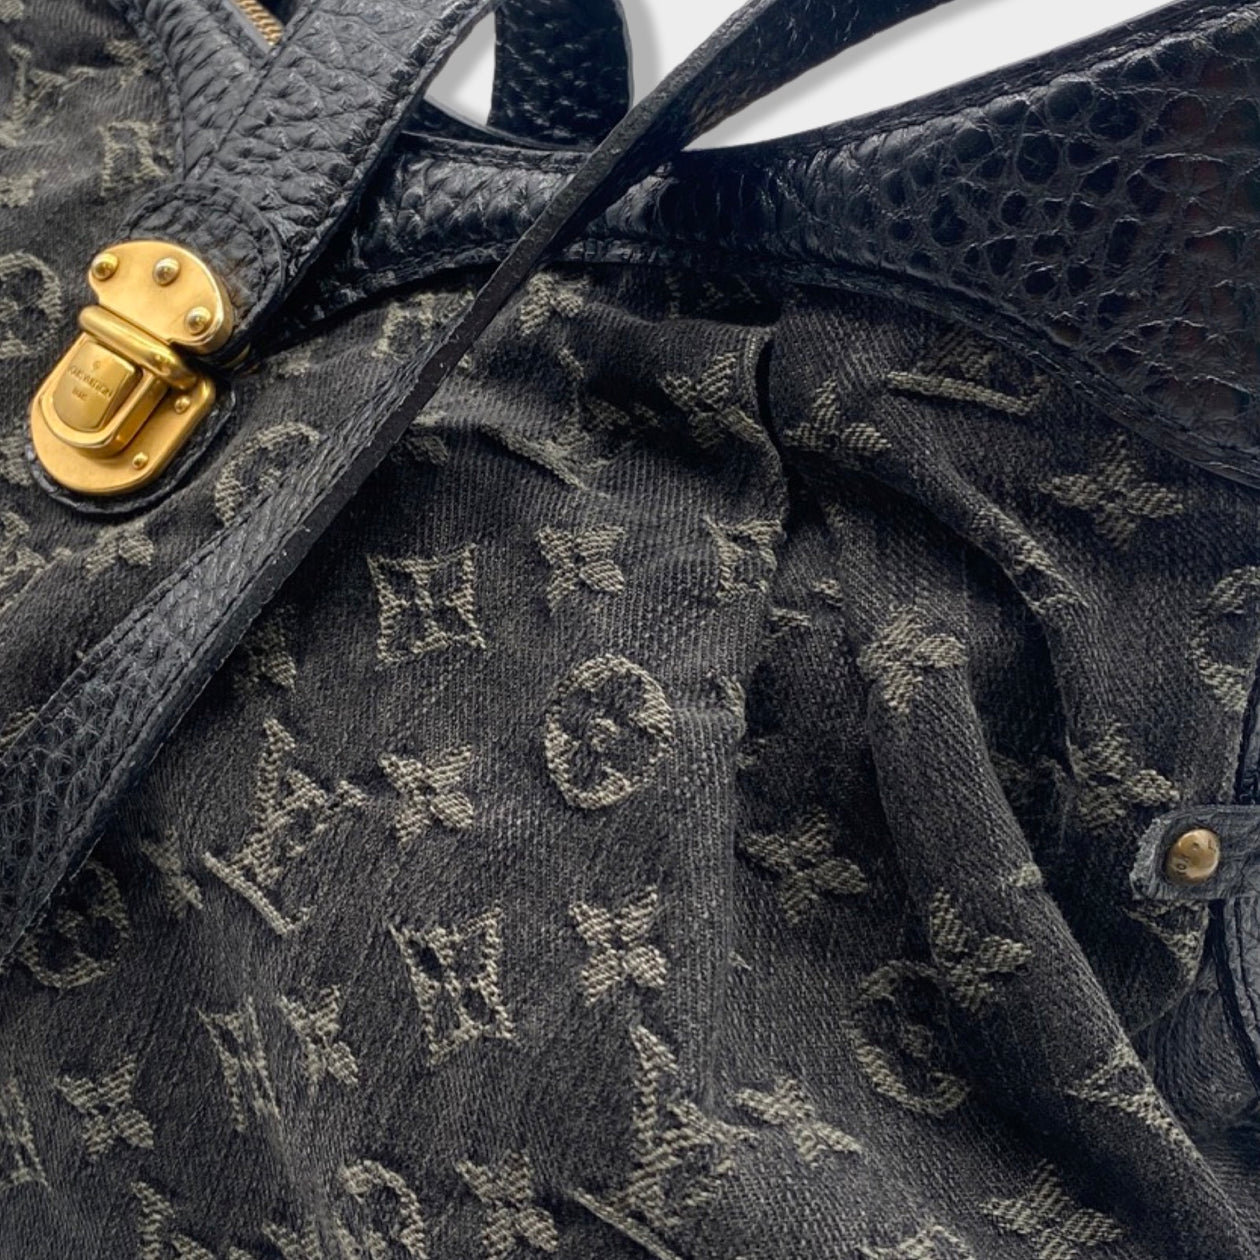 Louis Vuitton - Authenticated Jean - Cotton Black for Men, Very Good Condition